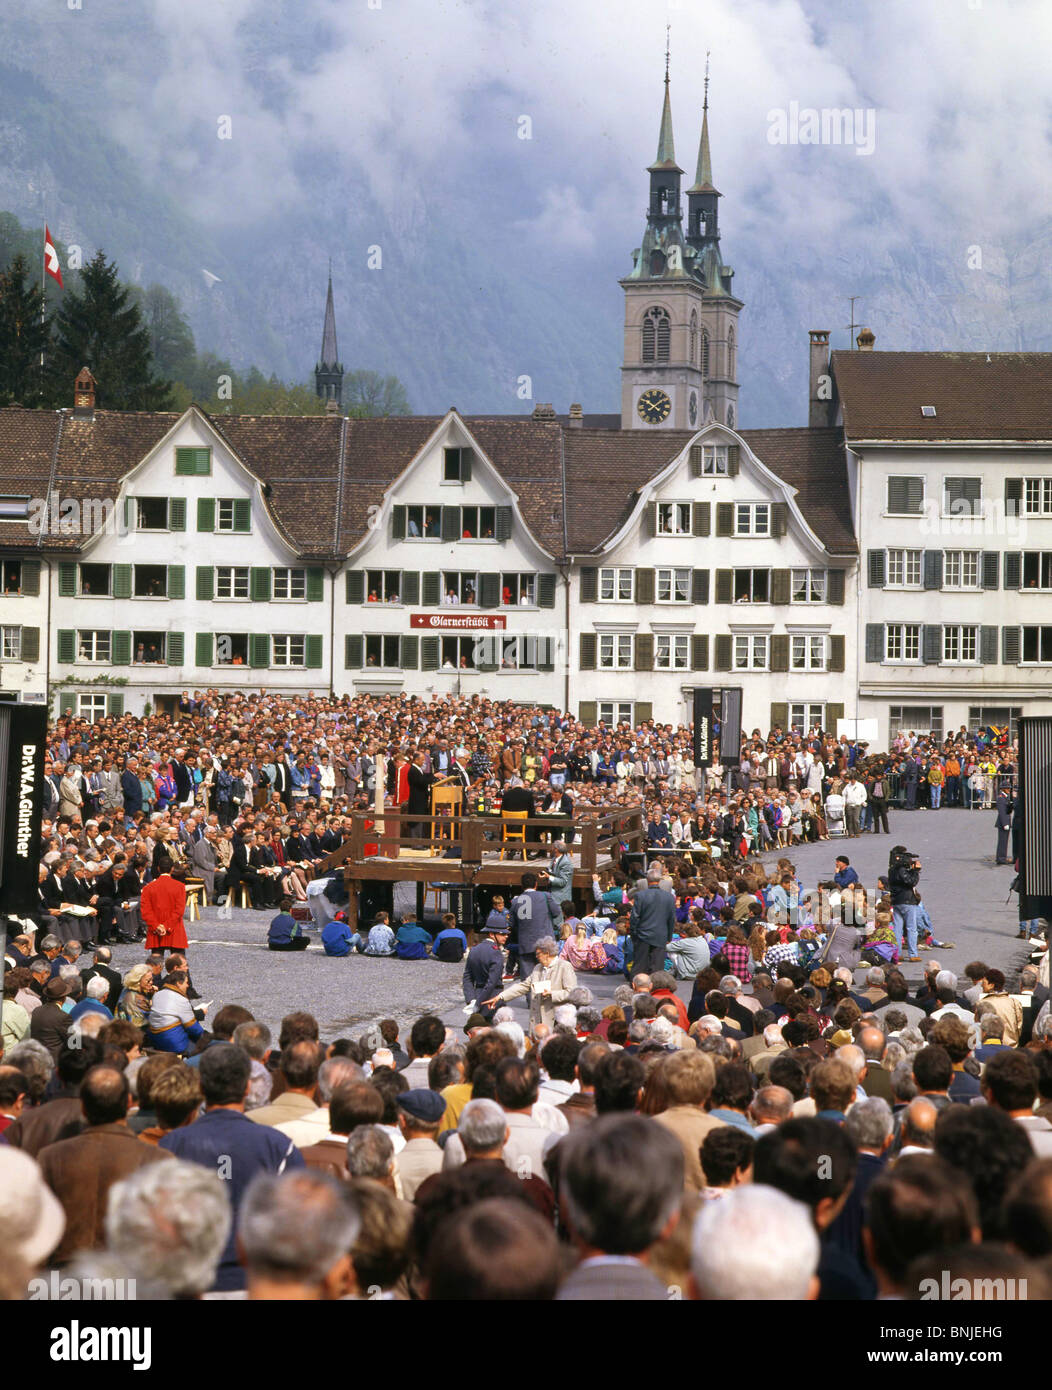 Town of Glarus Landsgemeinde People Switzerland cantonal assembly direct democracy square voting vote politics voters Stock Photo